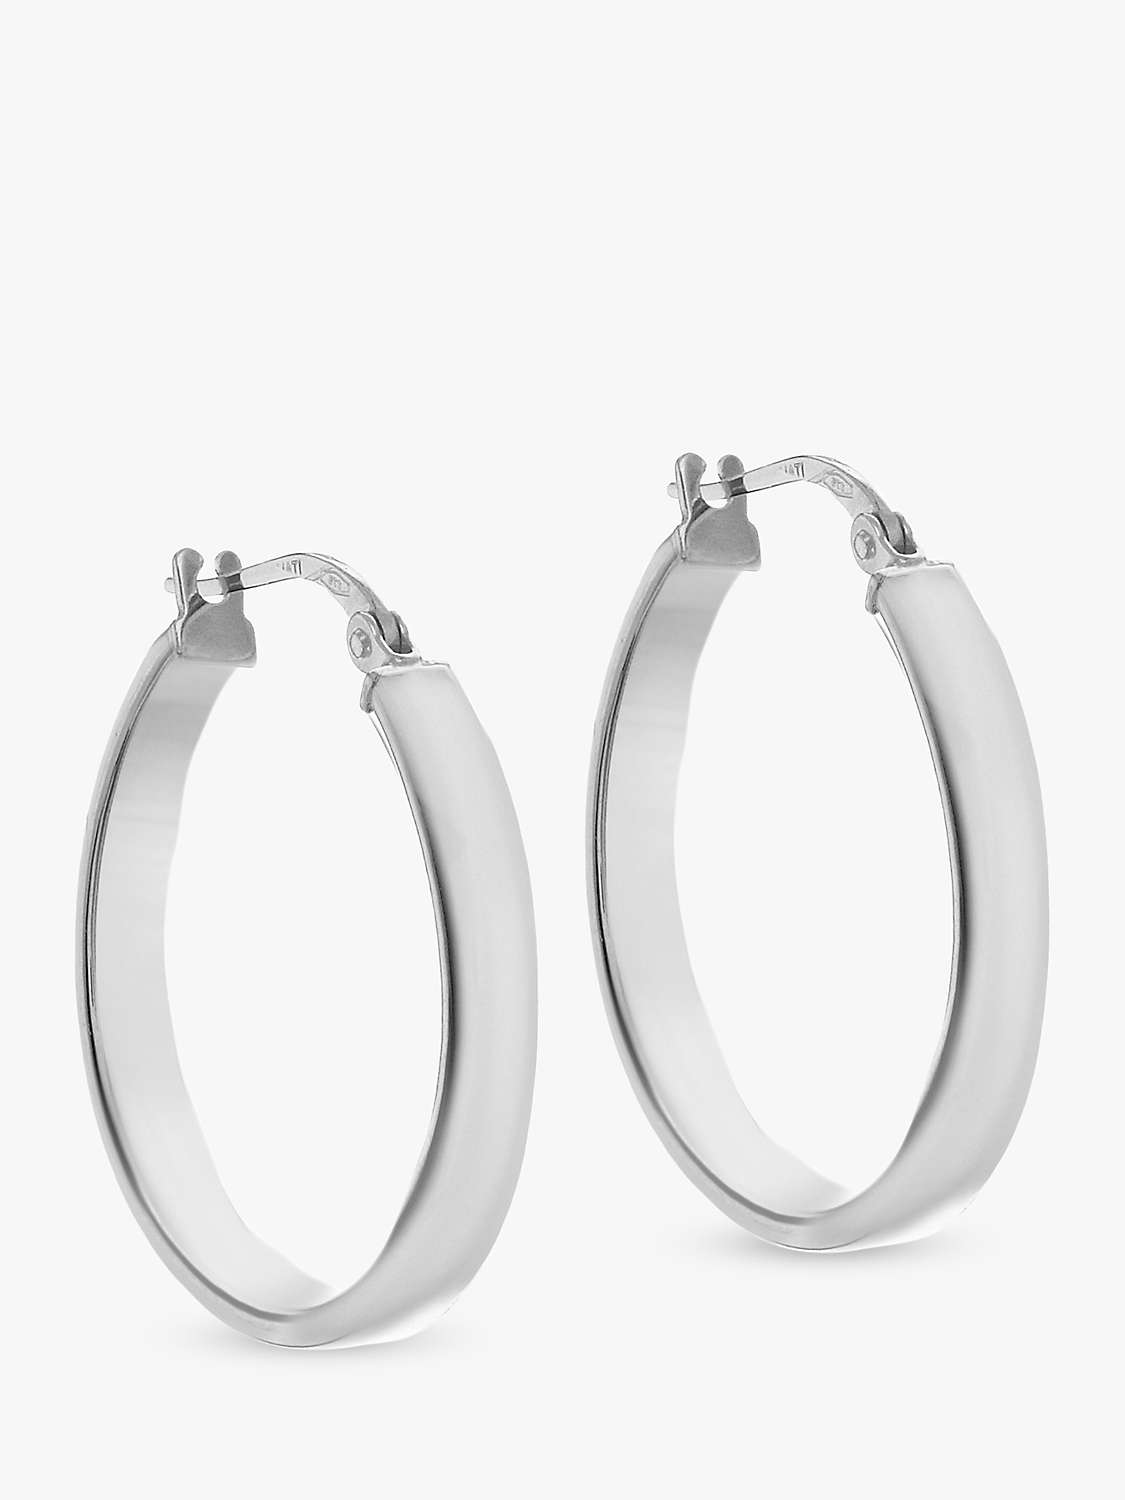 Buy IBB 9ct White Gold Hoop Earrings, White Gold Online at johnlewis.com